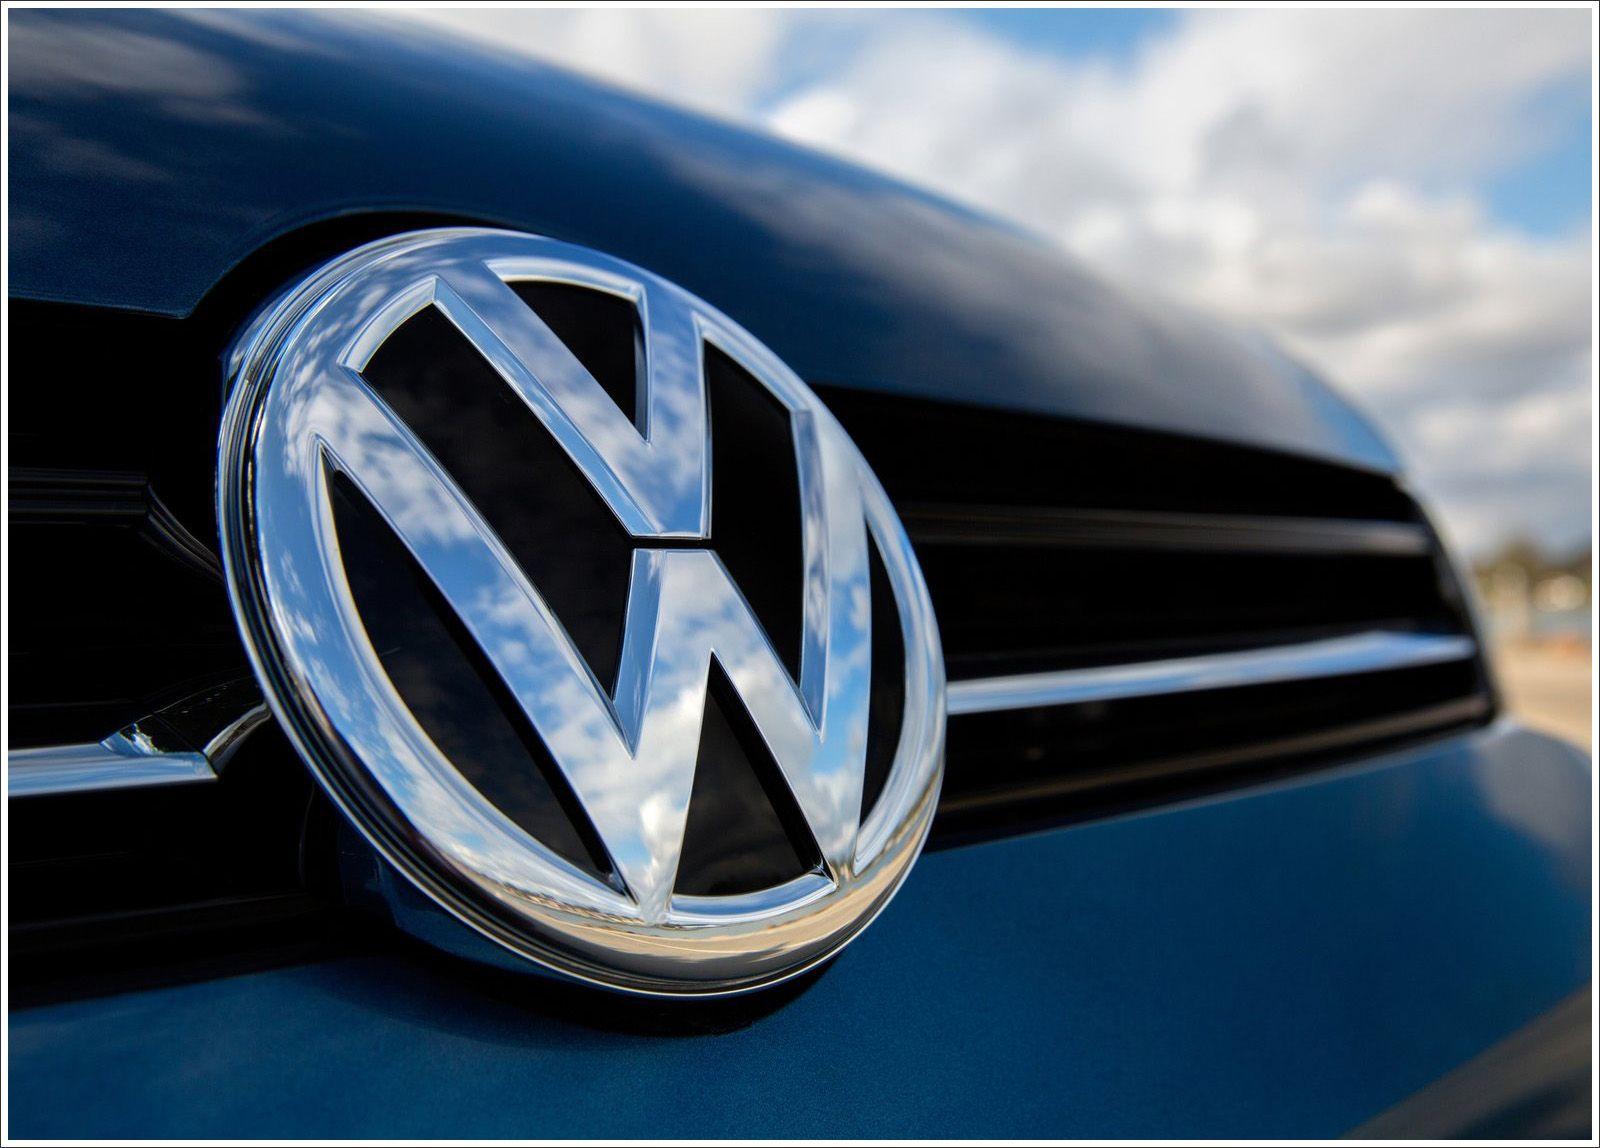 Volkswagen Logo - Volkswagen Logo Meaning and History, latest models | World Cars Brands